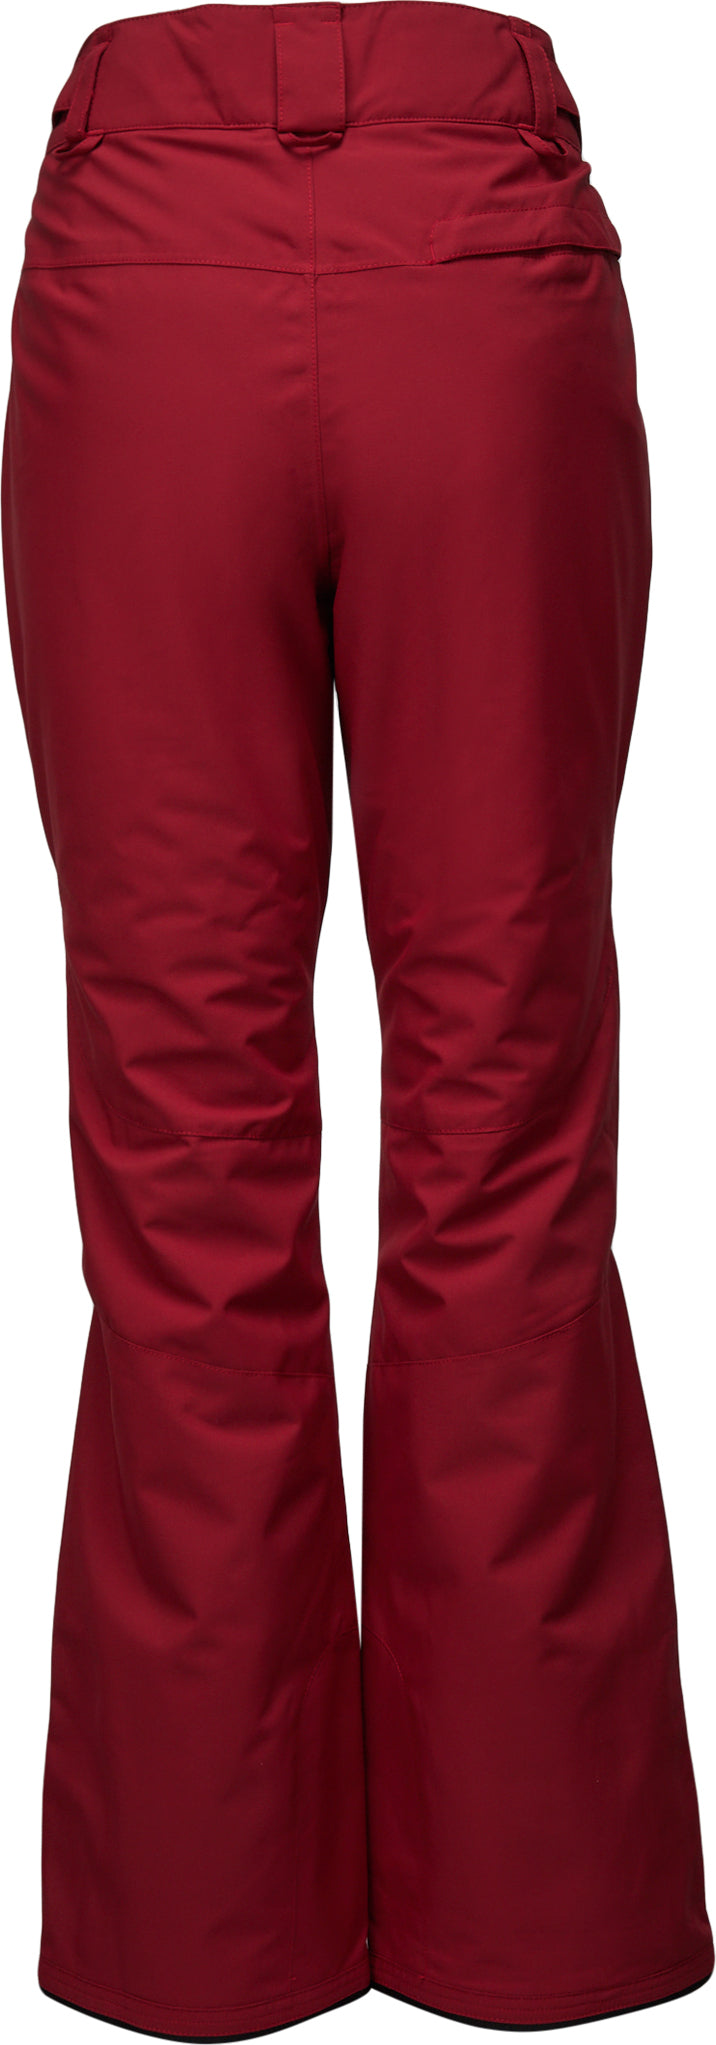 O'Neill Total Disorder Slim Snow Pants - Women's ski pants